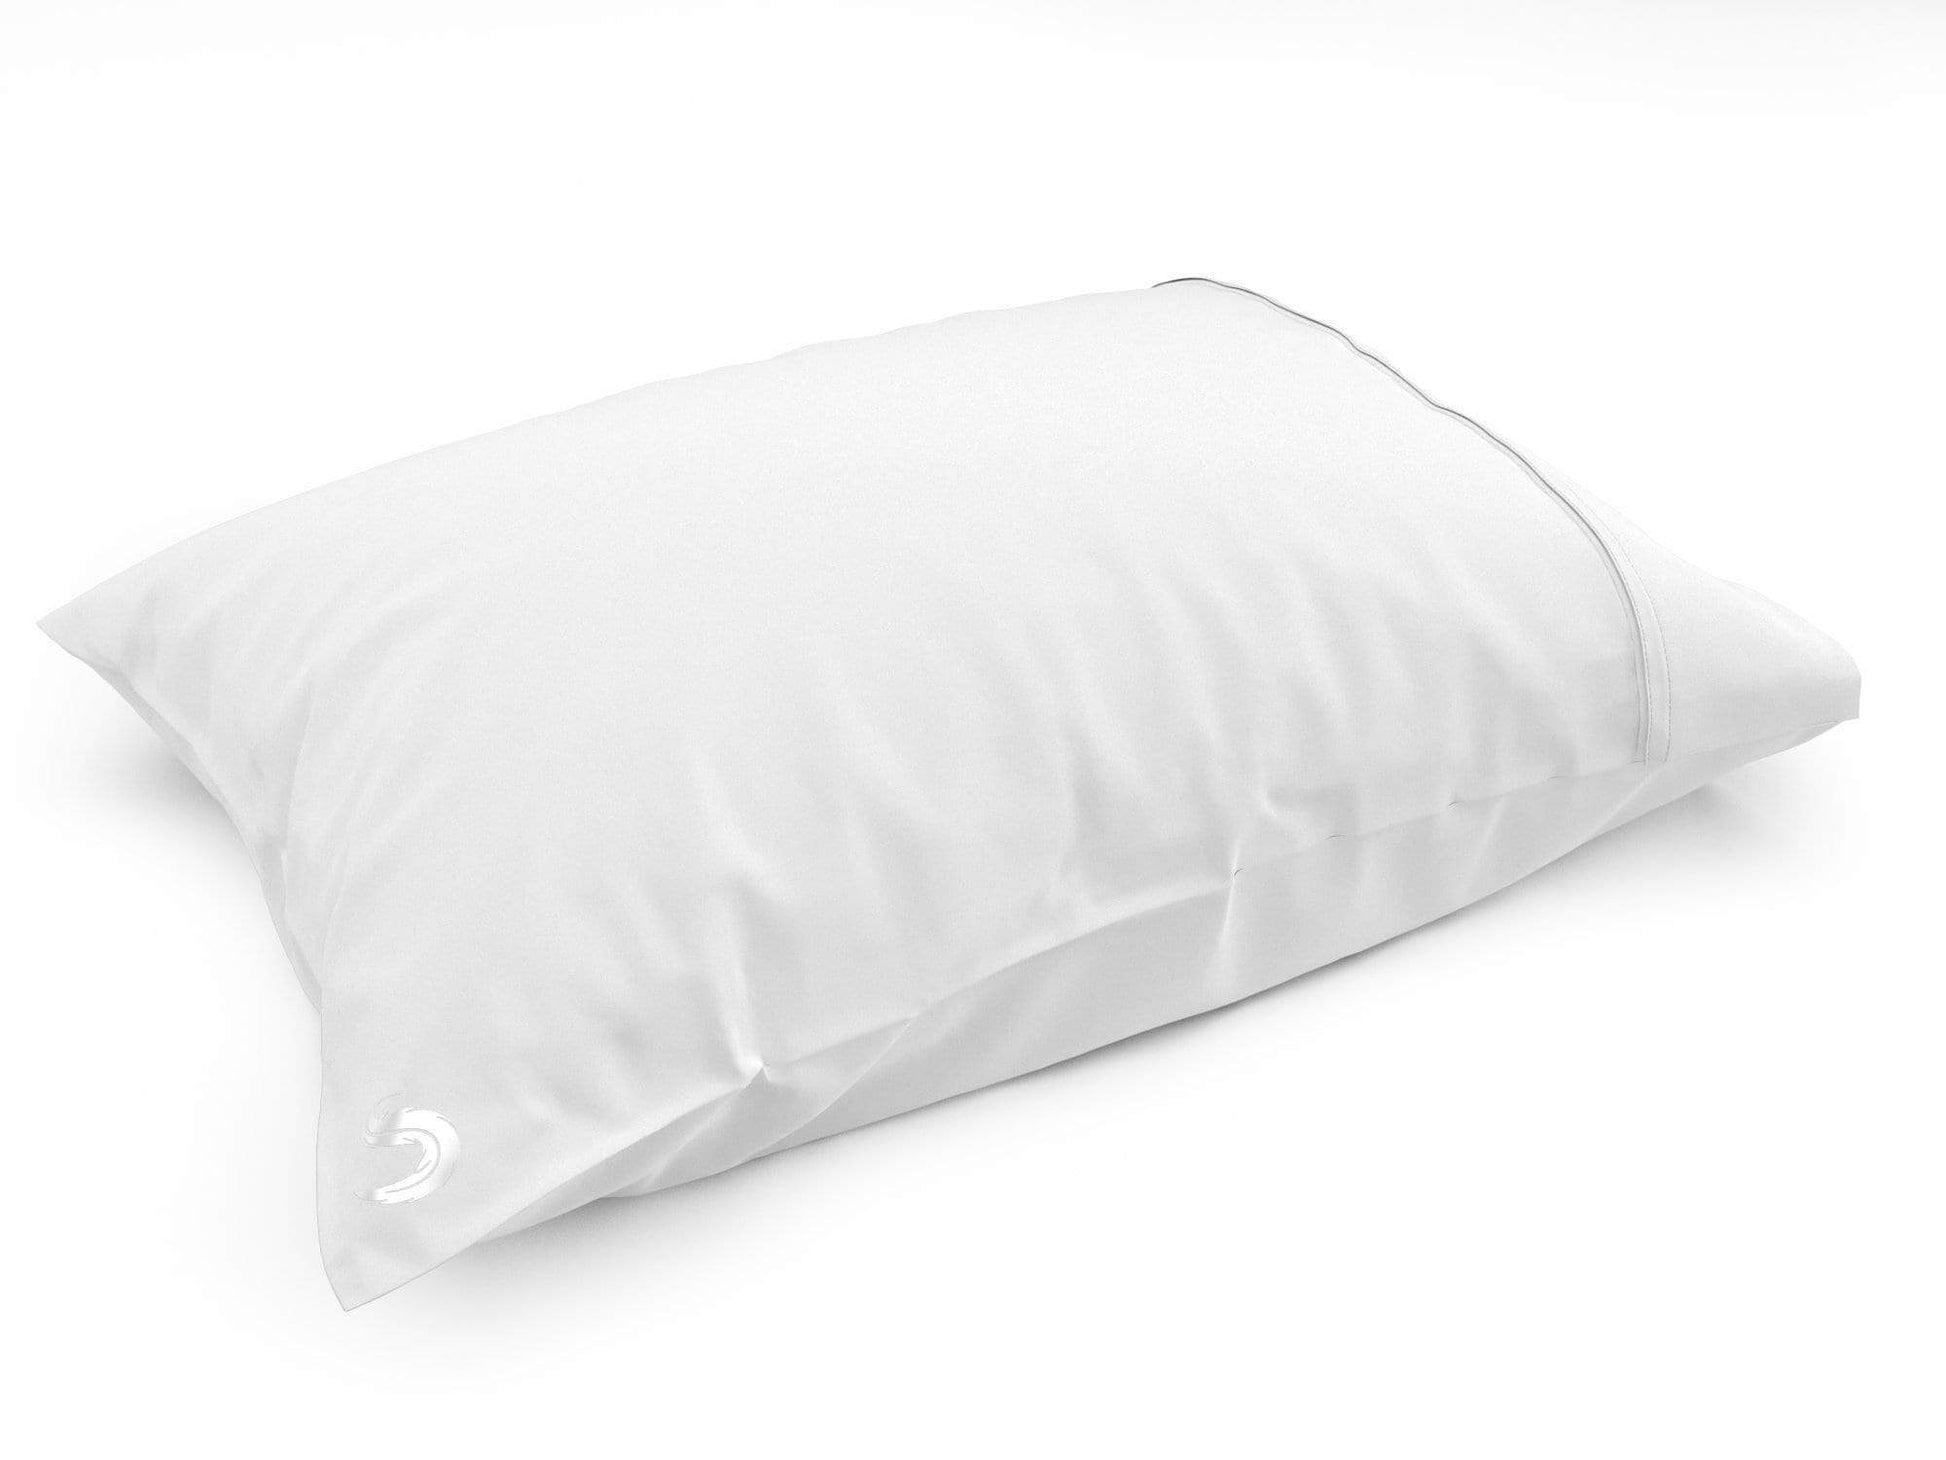 Sleepgram pillowcase angle3